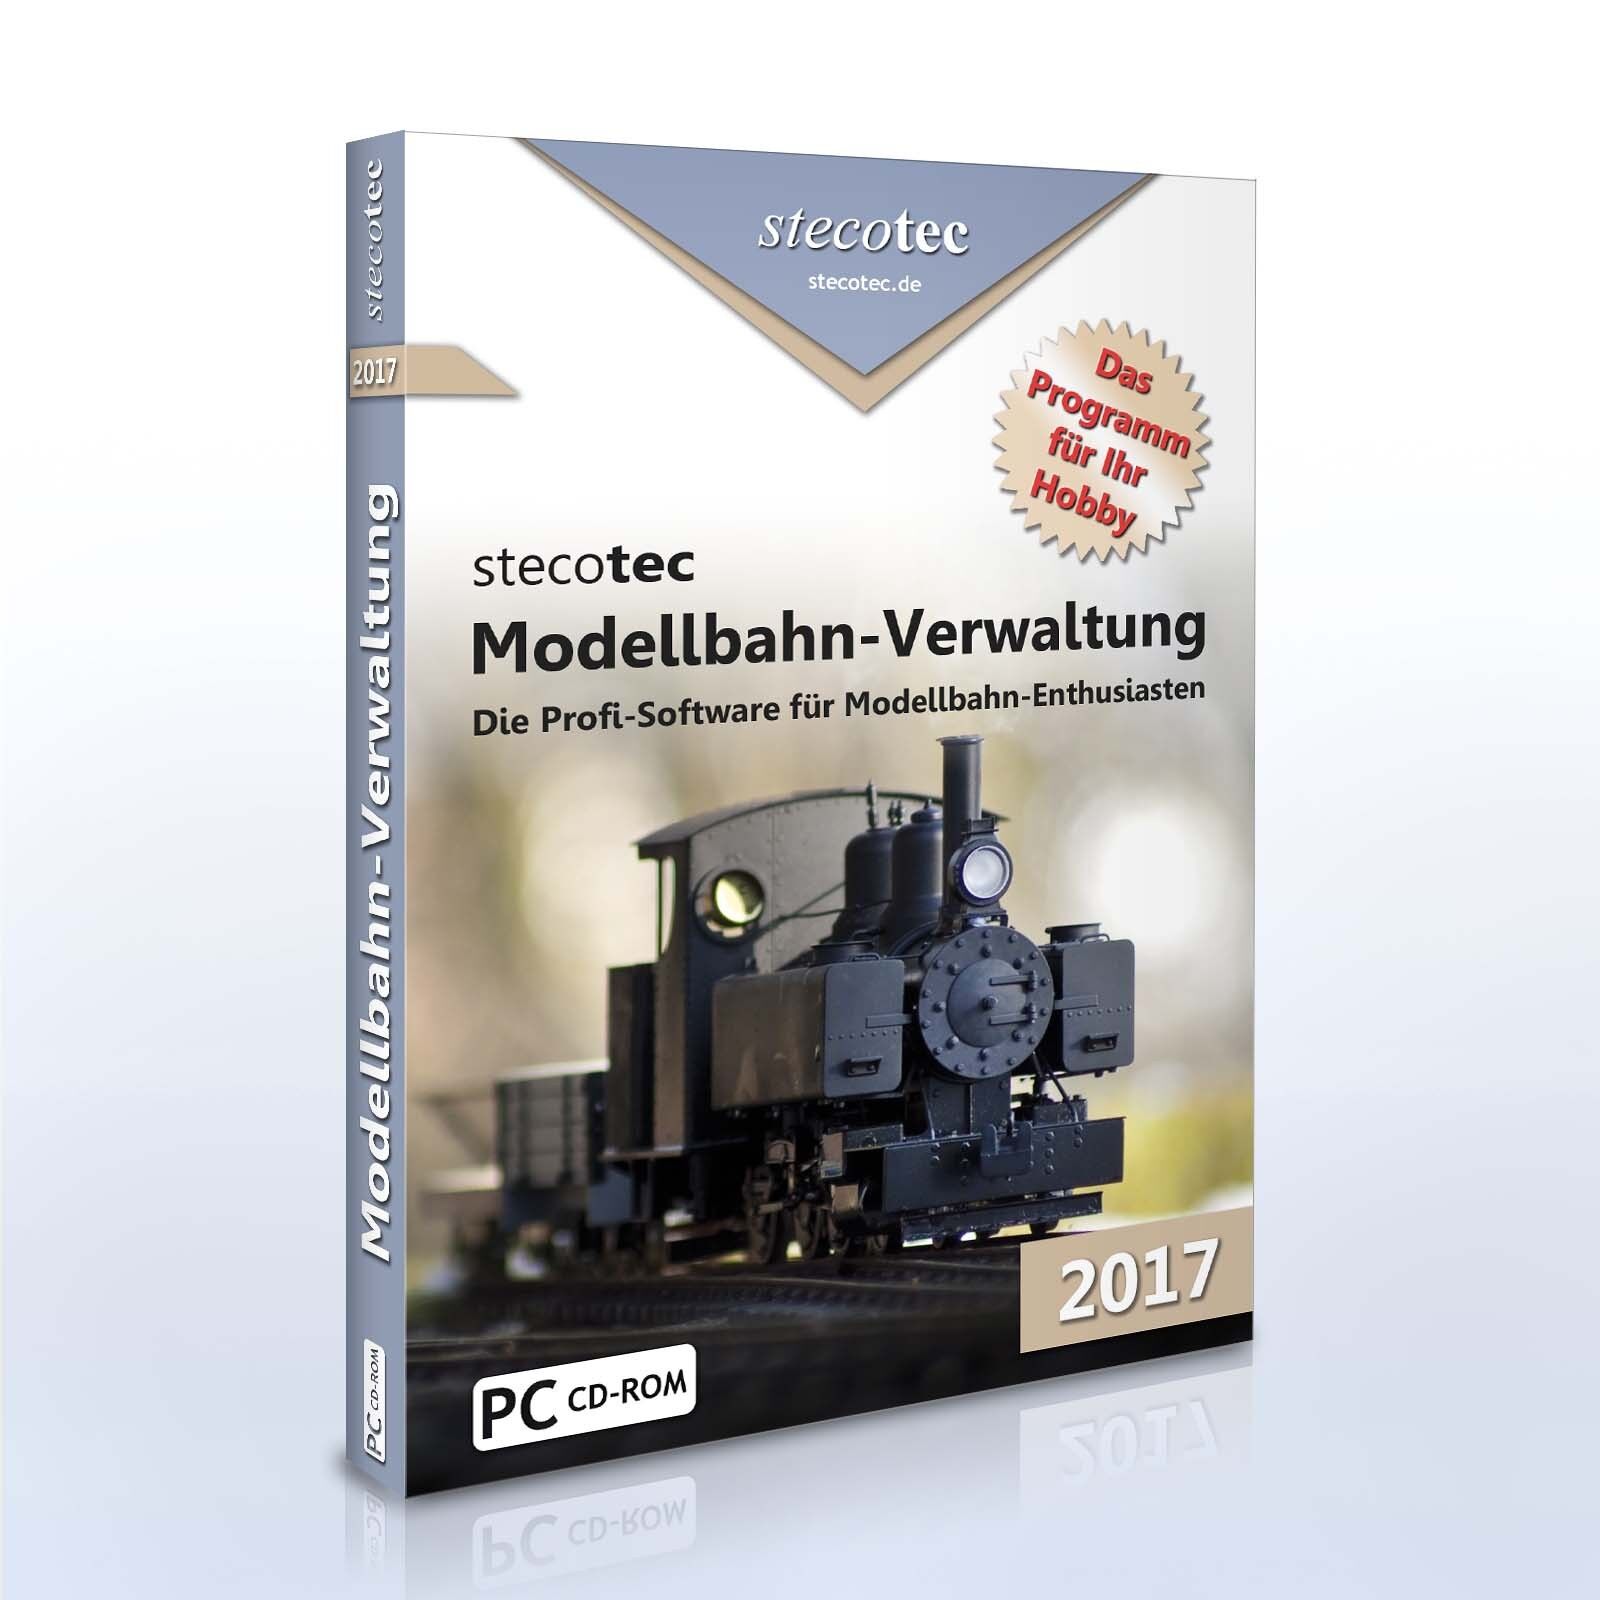 Stecotec Model Railway Management 2017 [CD VERSION] Software / Program for Collectors